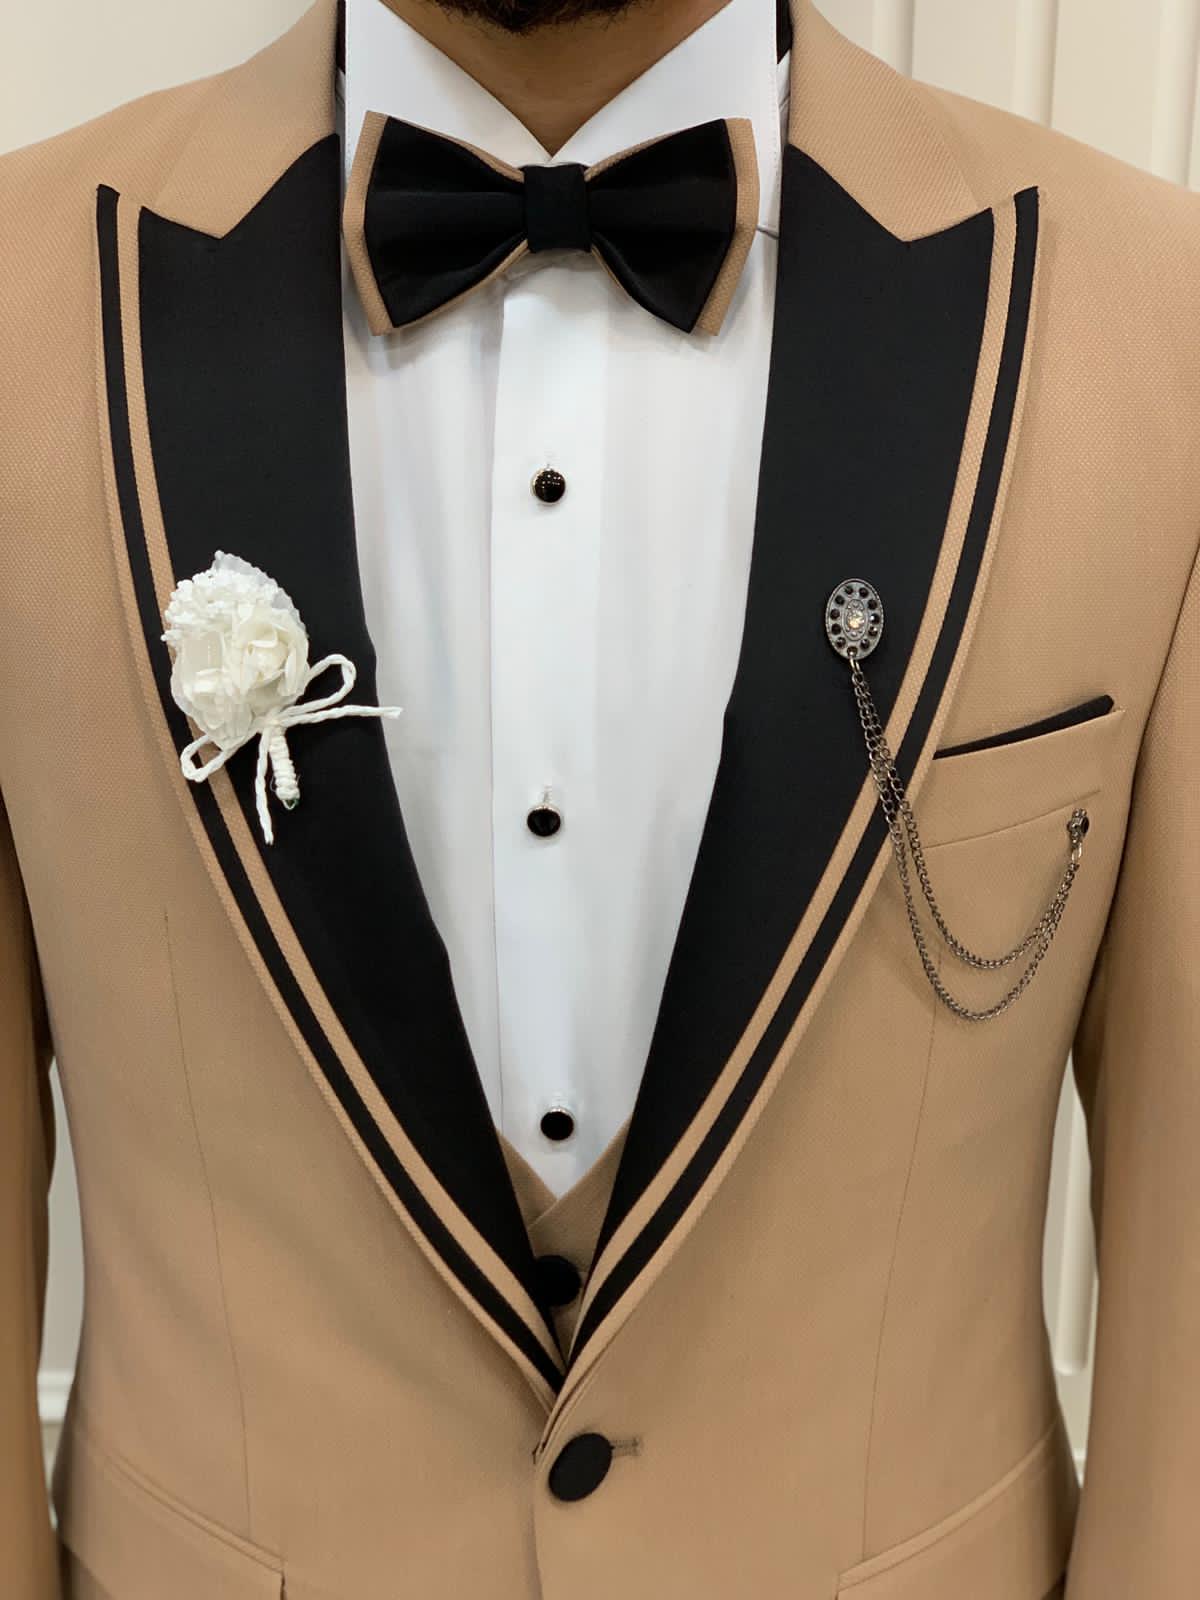  Elegant Cream Tuxedo from HolloMen